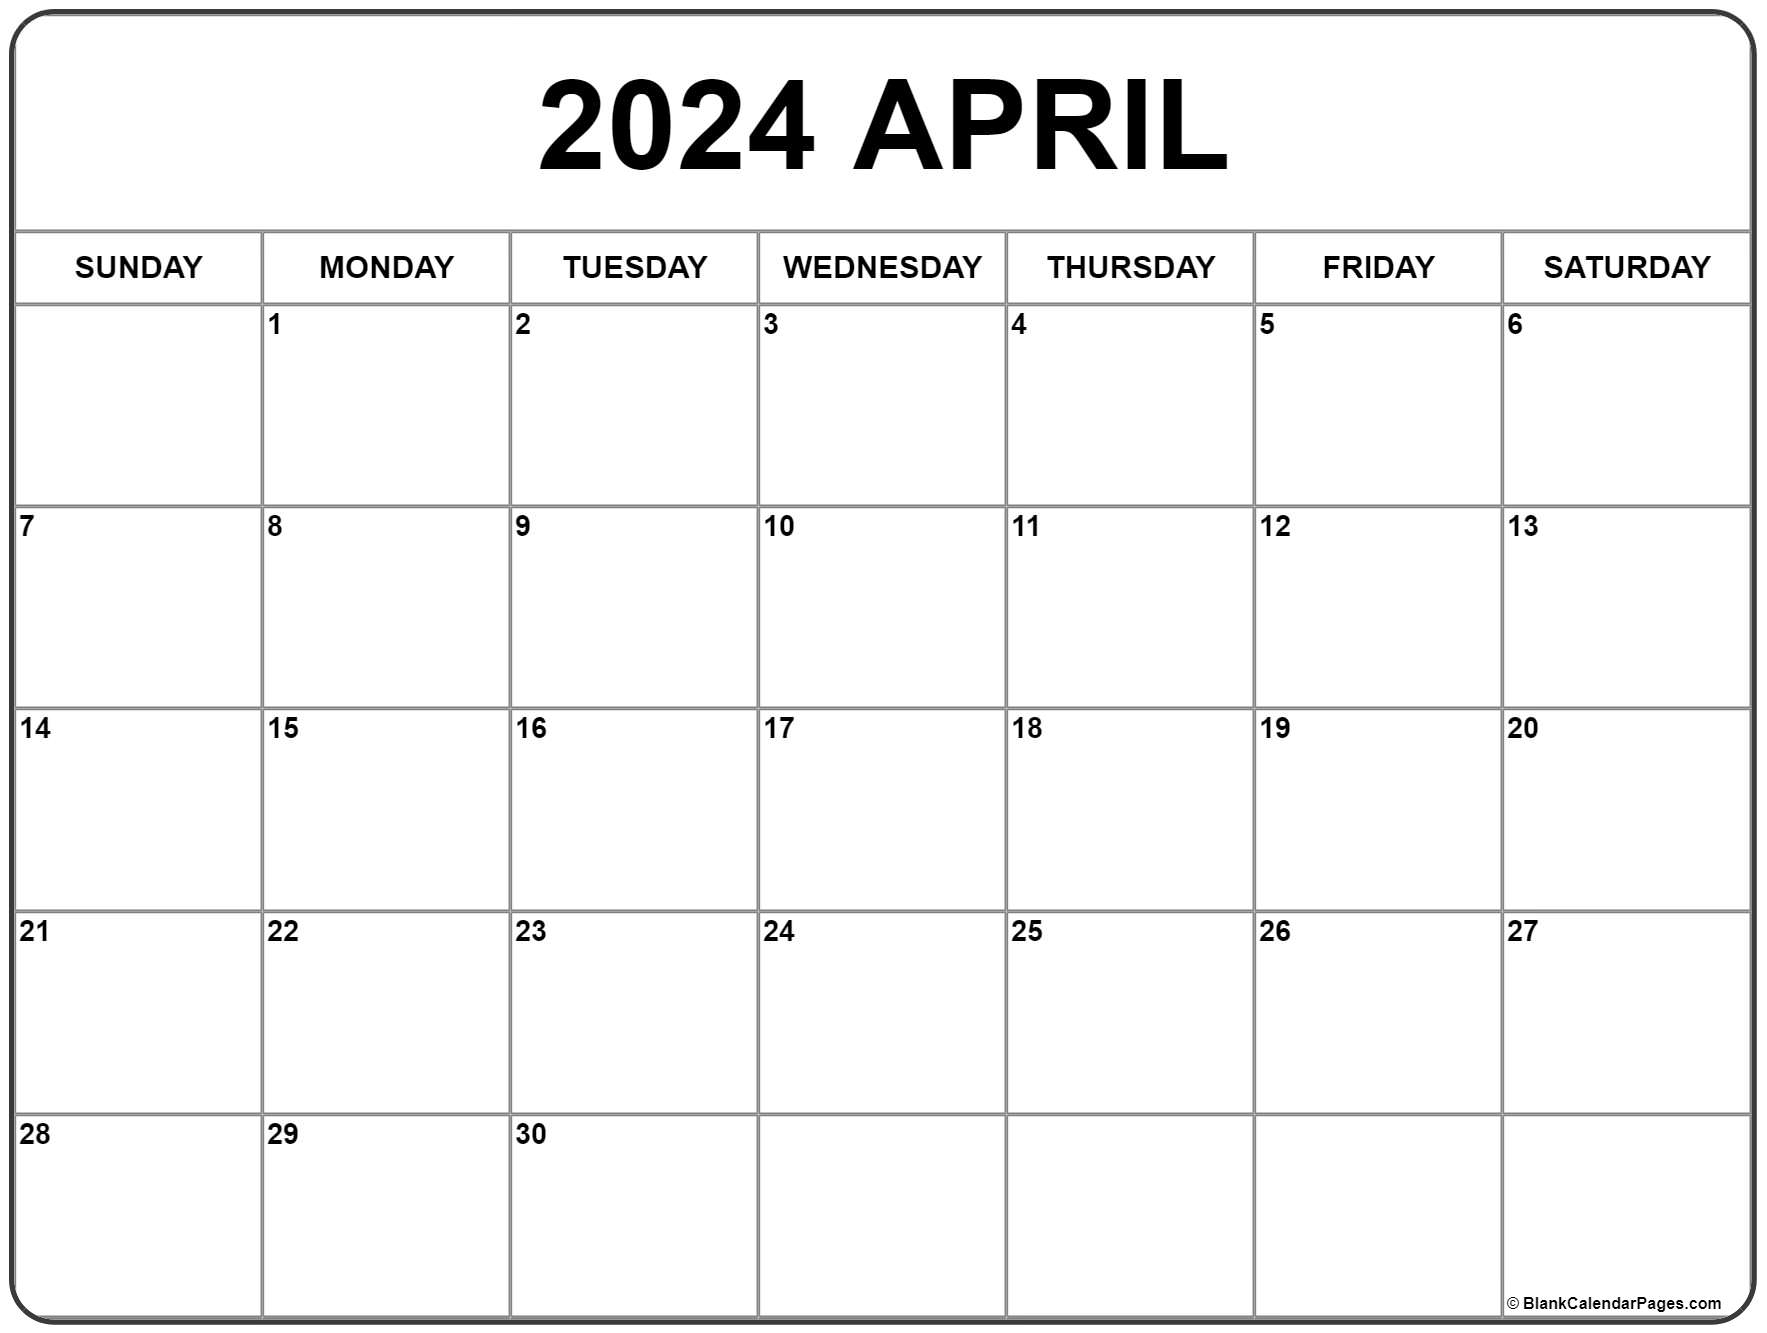 April 2024 Calendar | Free Printable Calendar regarding April 2024 Calendar Editable